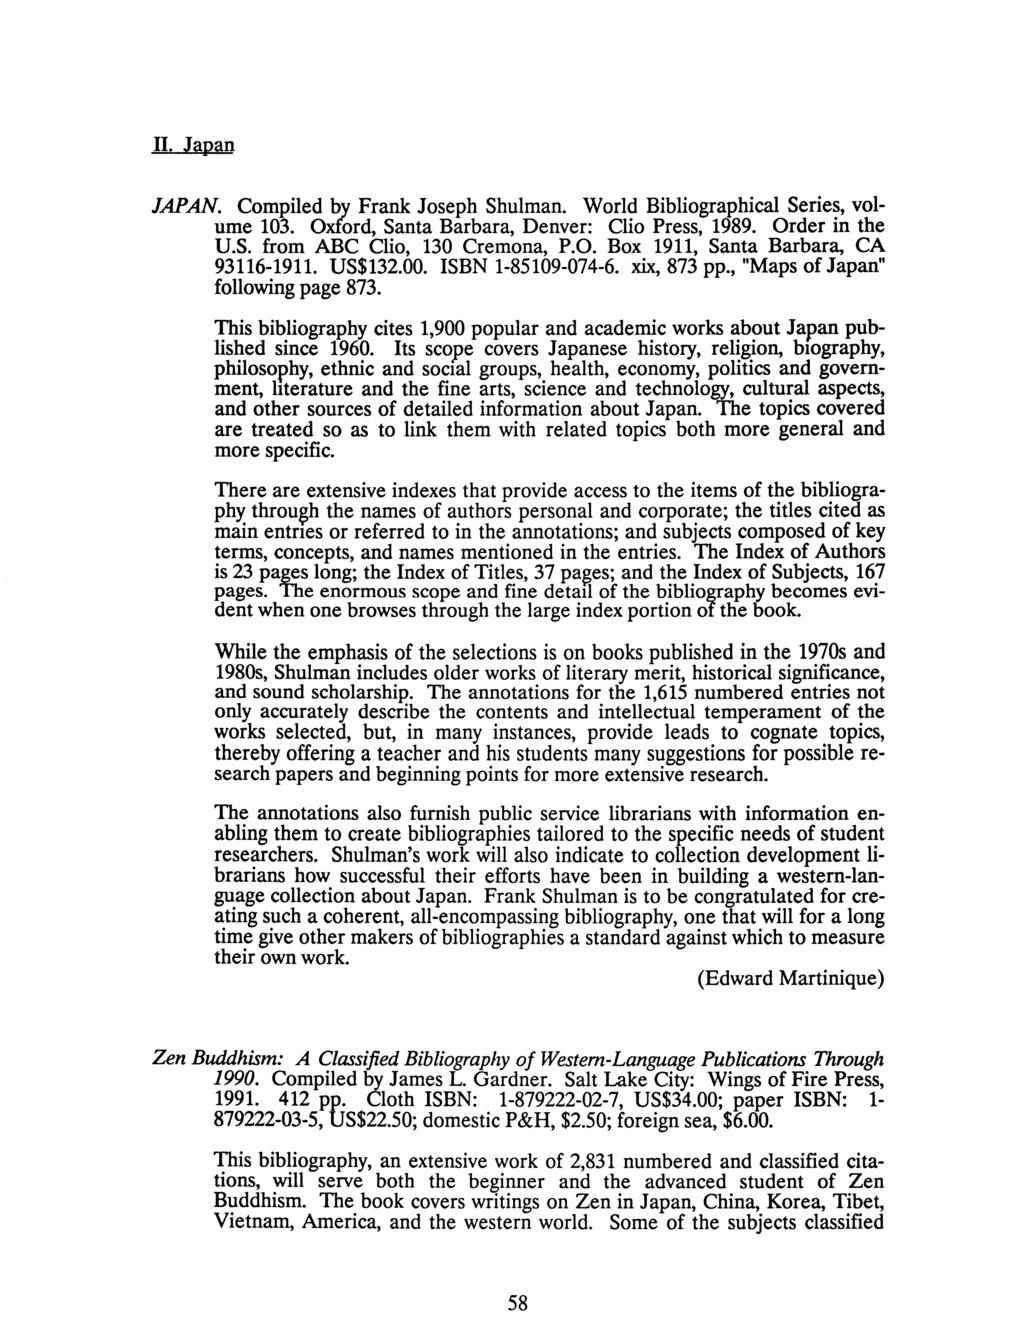 II. Japan JAPAN. Compiled by Frank Joseph Shulman. World Bibliographical Series, vol ume 103. Oxford, Santa Barbara, Denver: Clio Press, 1989. Order in the U.S. from ABC Clio, 130 Cremona, P.O. Box 1911, Santa Barbara, C A 93116-1911.